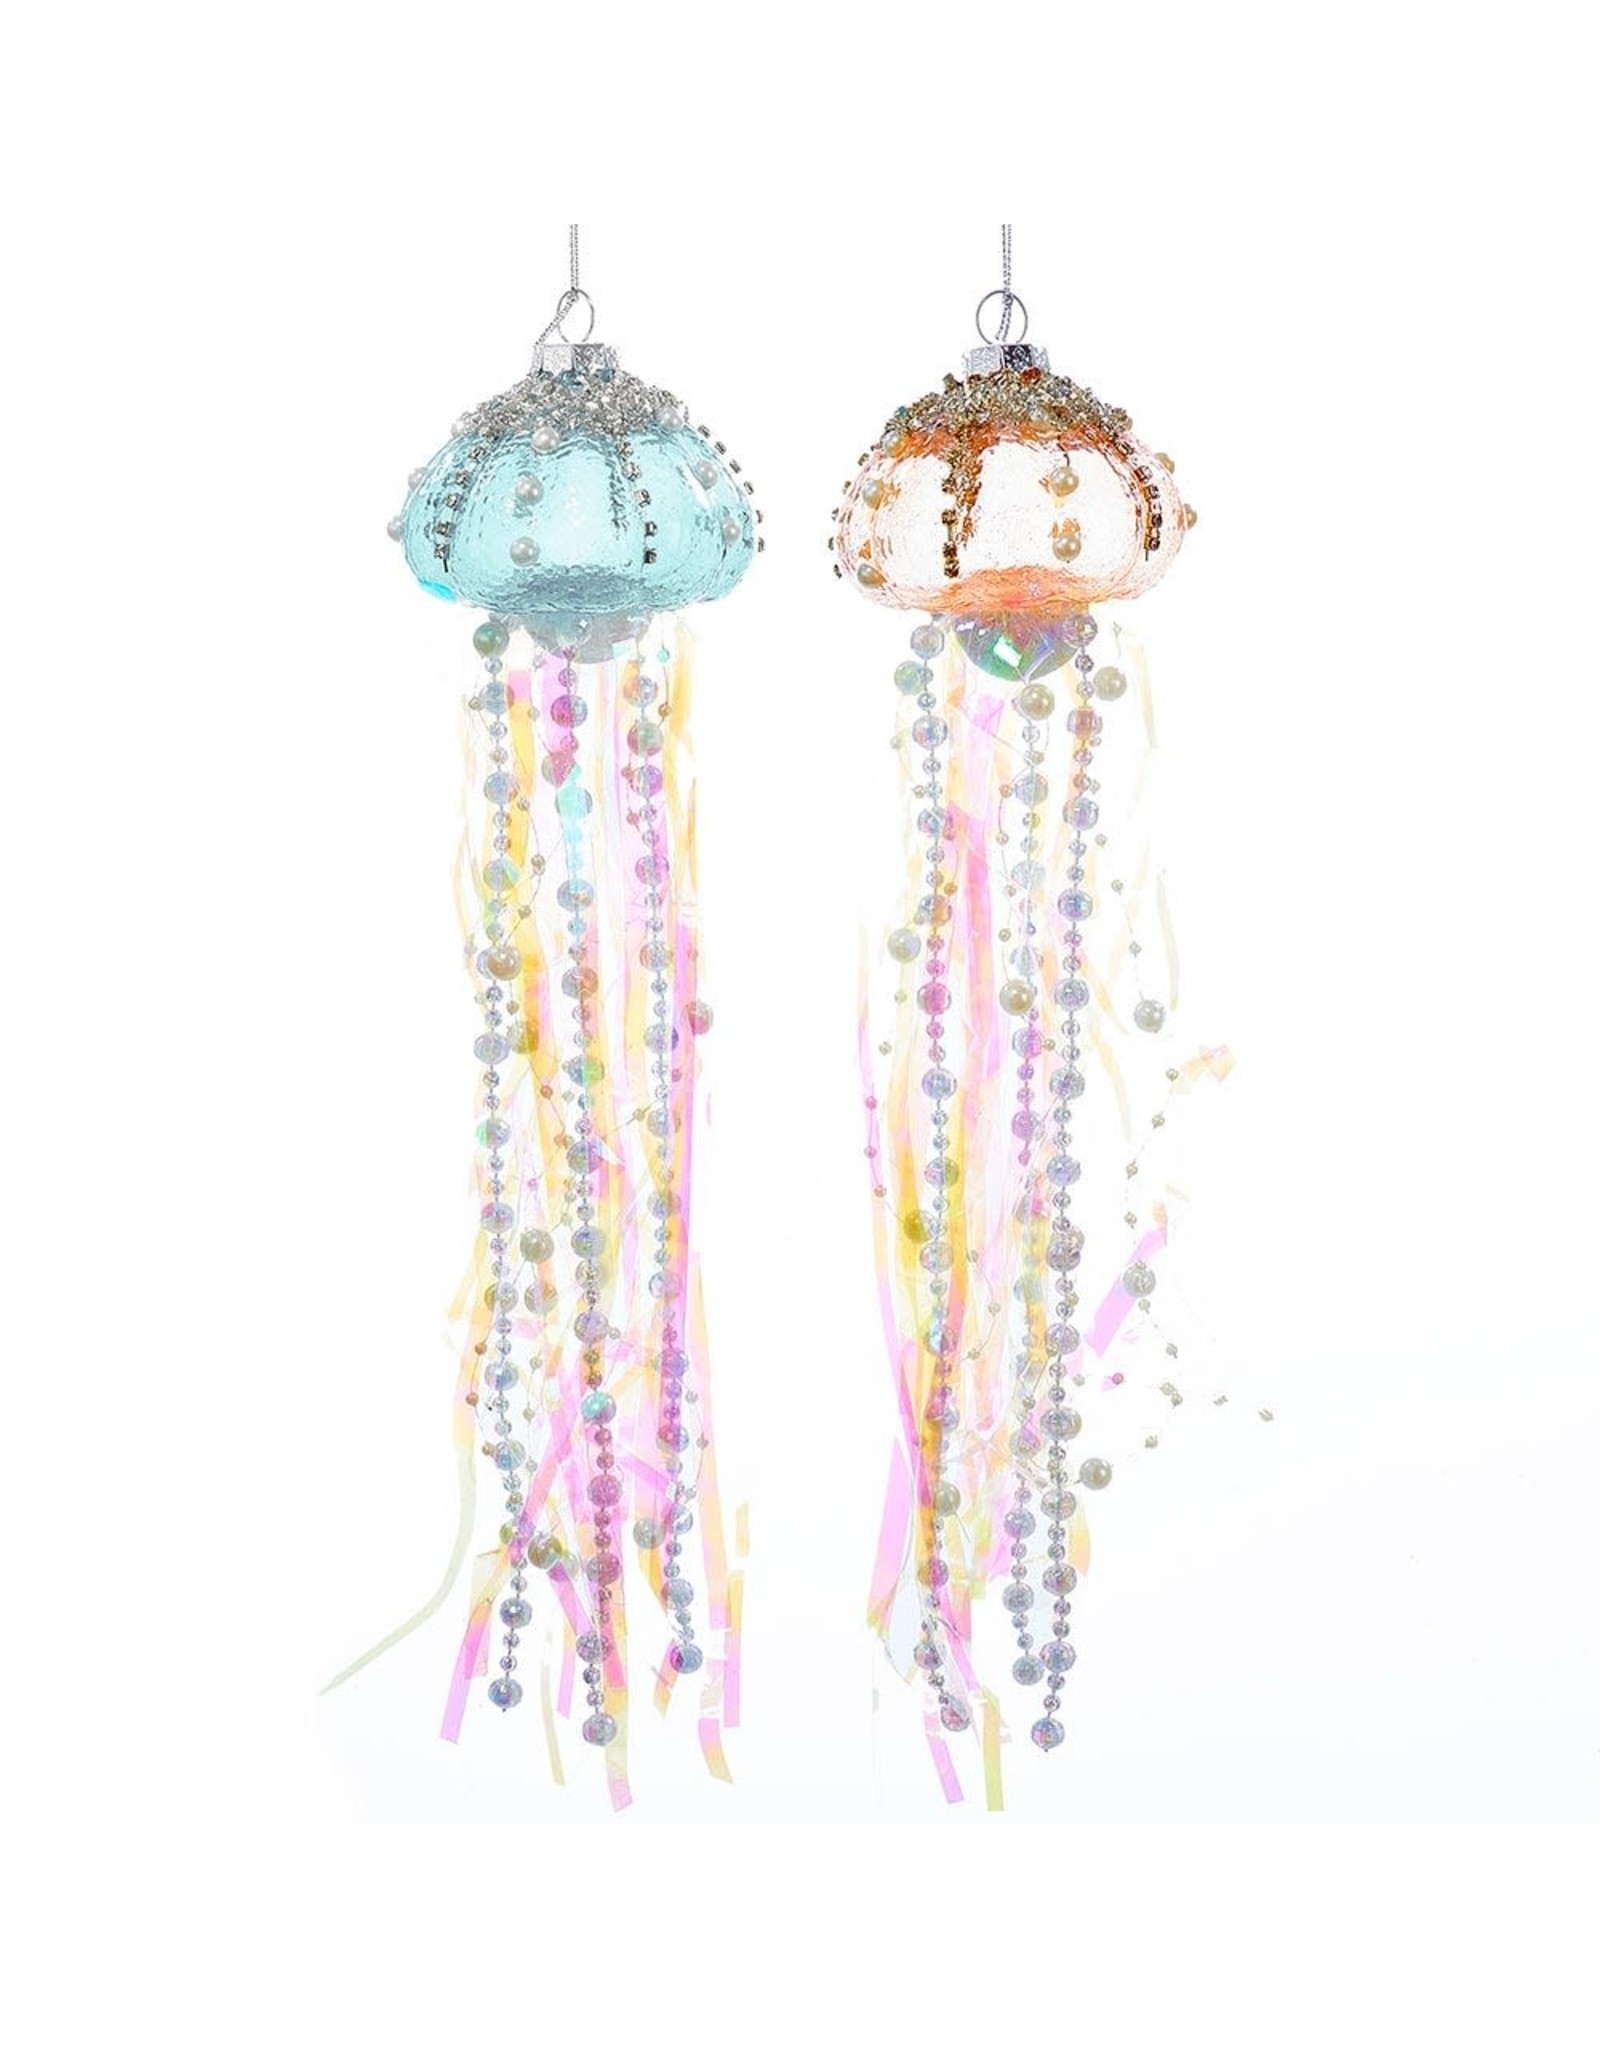 Kurt Adler Jellyfish Glass Ornaments w Tinsel Bead Tentacles 2 Styles